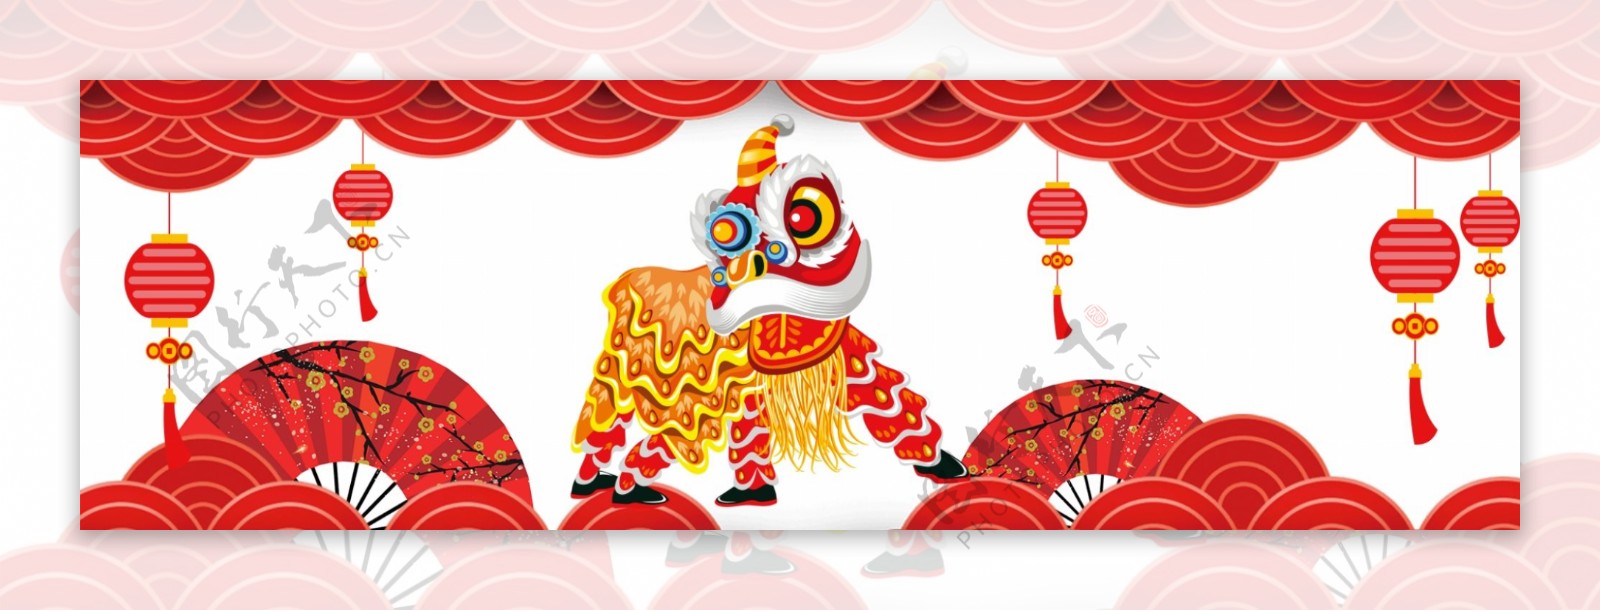 舞狮新春元旦春节中国年banner背景